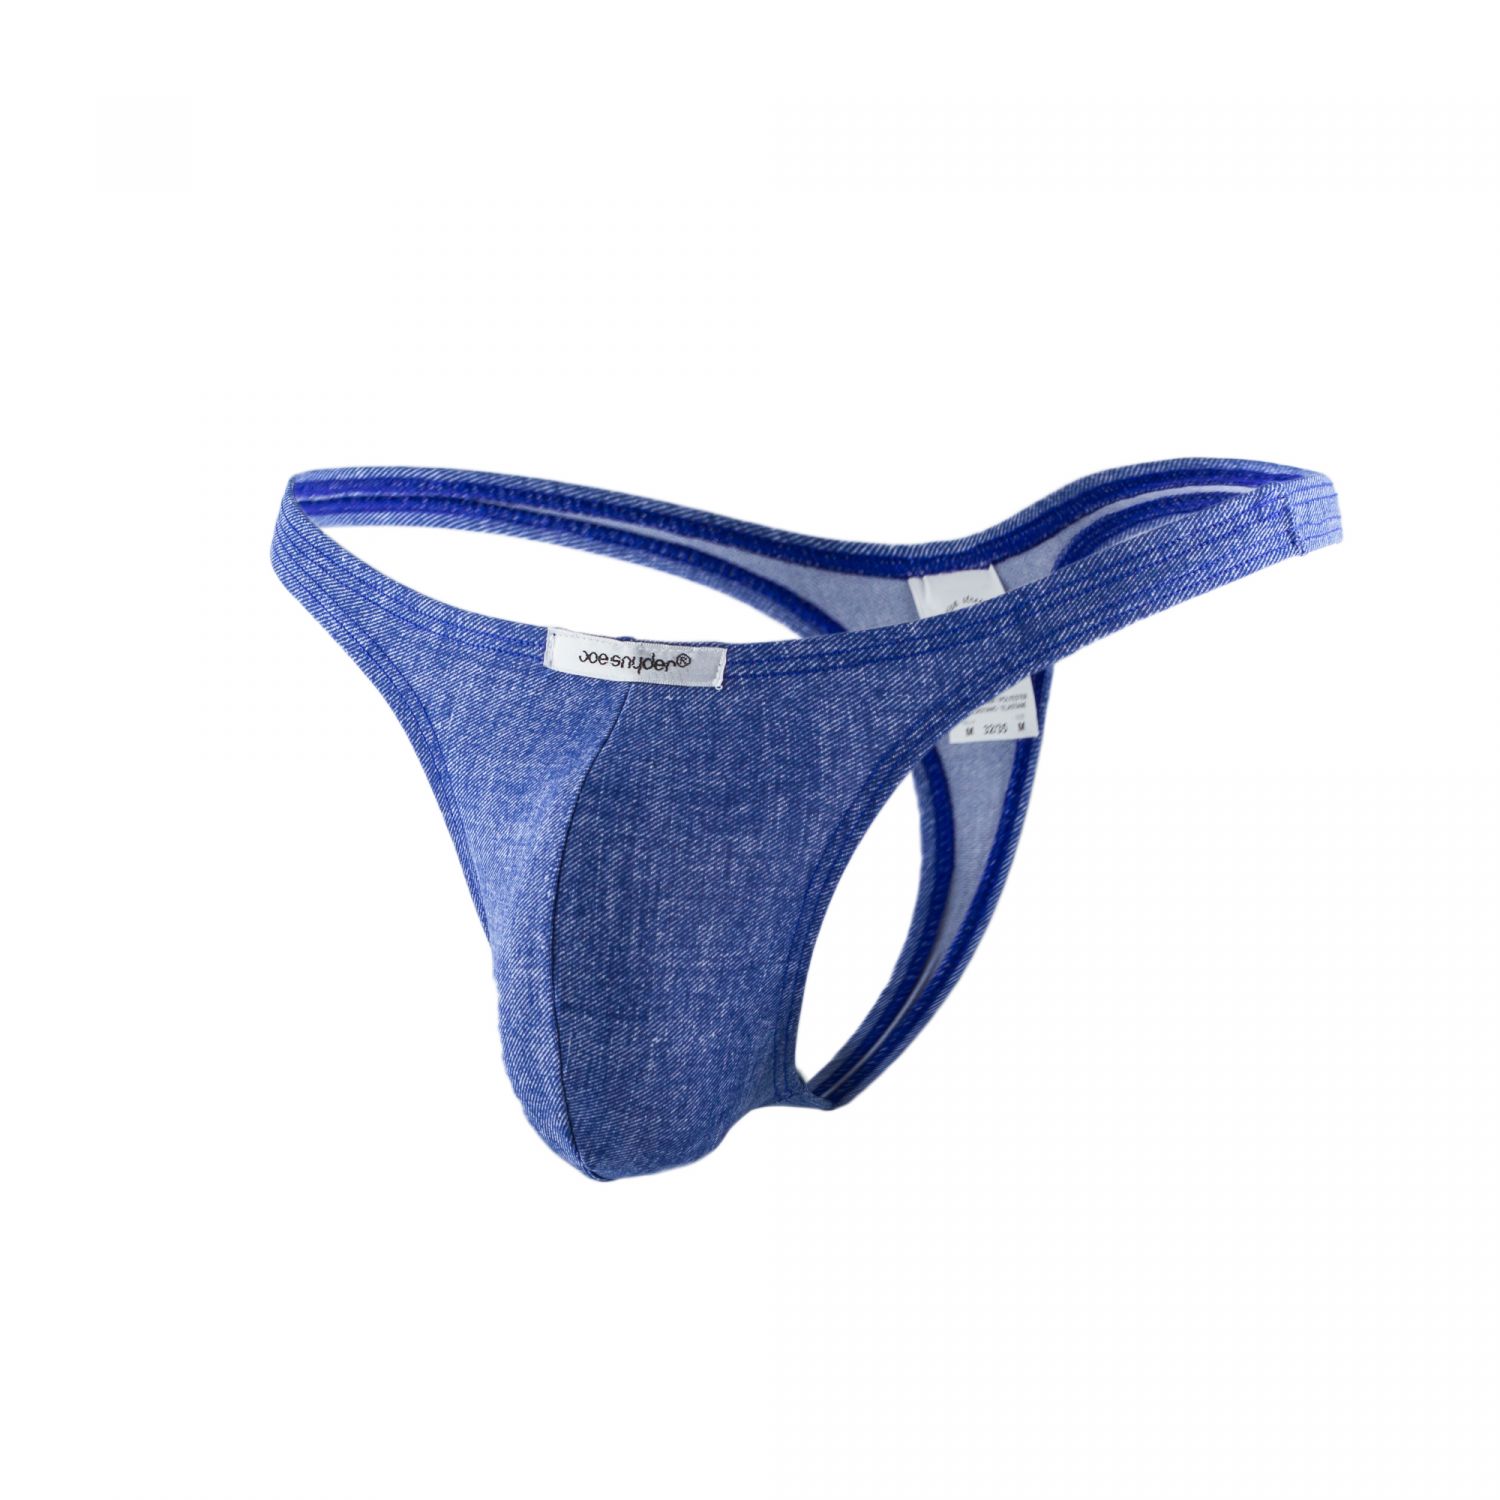 Joe Snyder Underwear Shining Thong Denim Blue JS03 | men's underwear ...